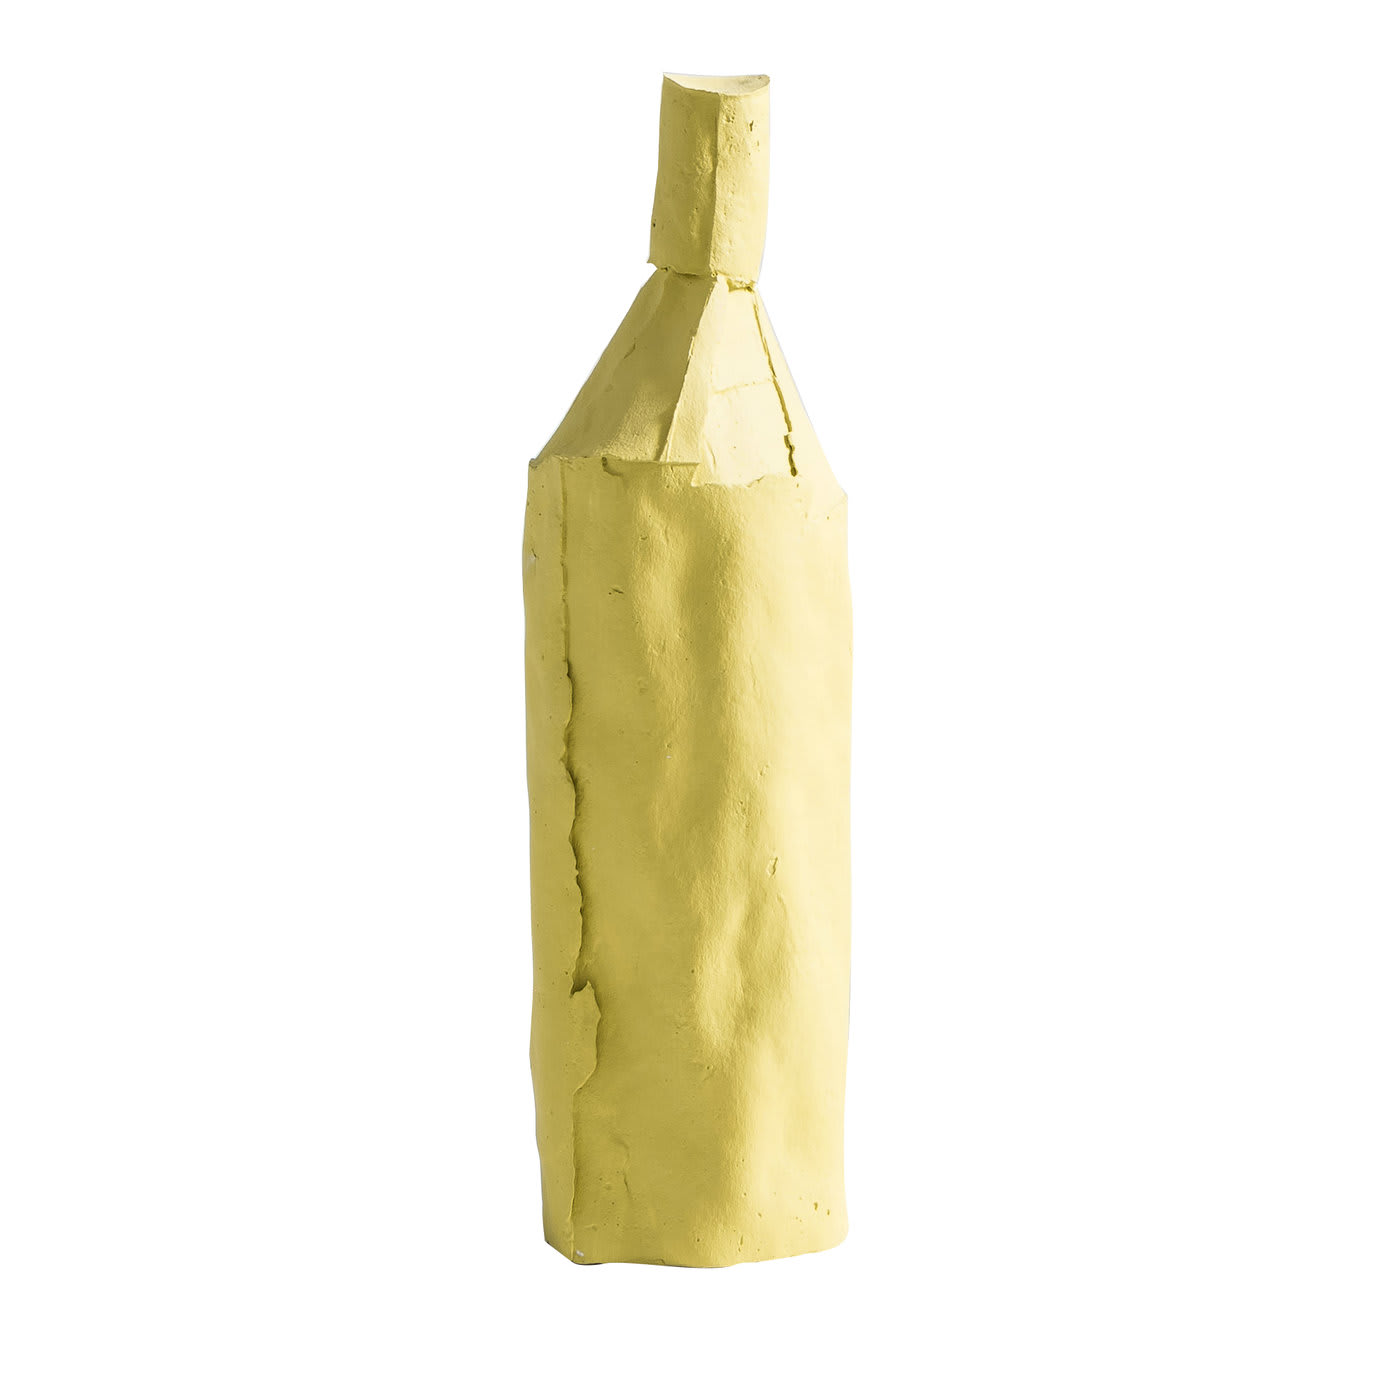 Cartocci Liscia Yellow Decorative Bottle - Paola Paronetto